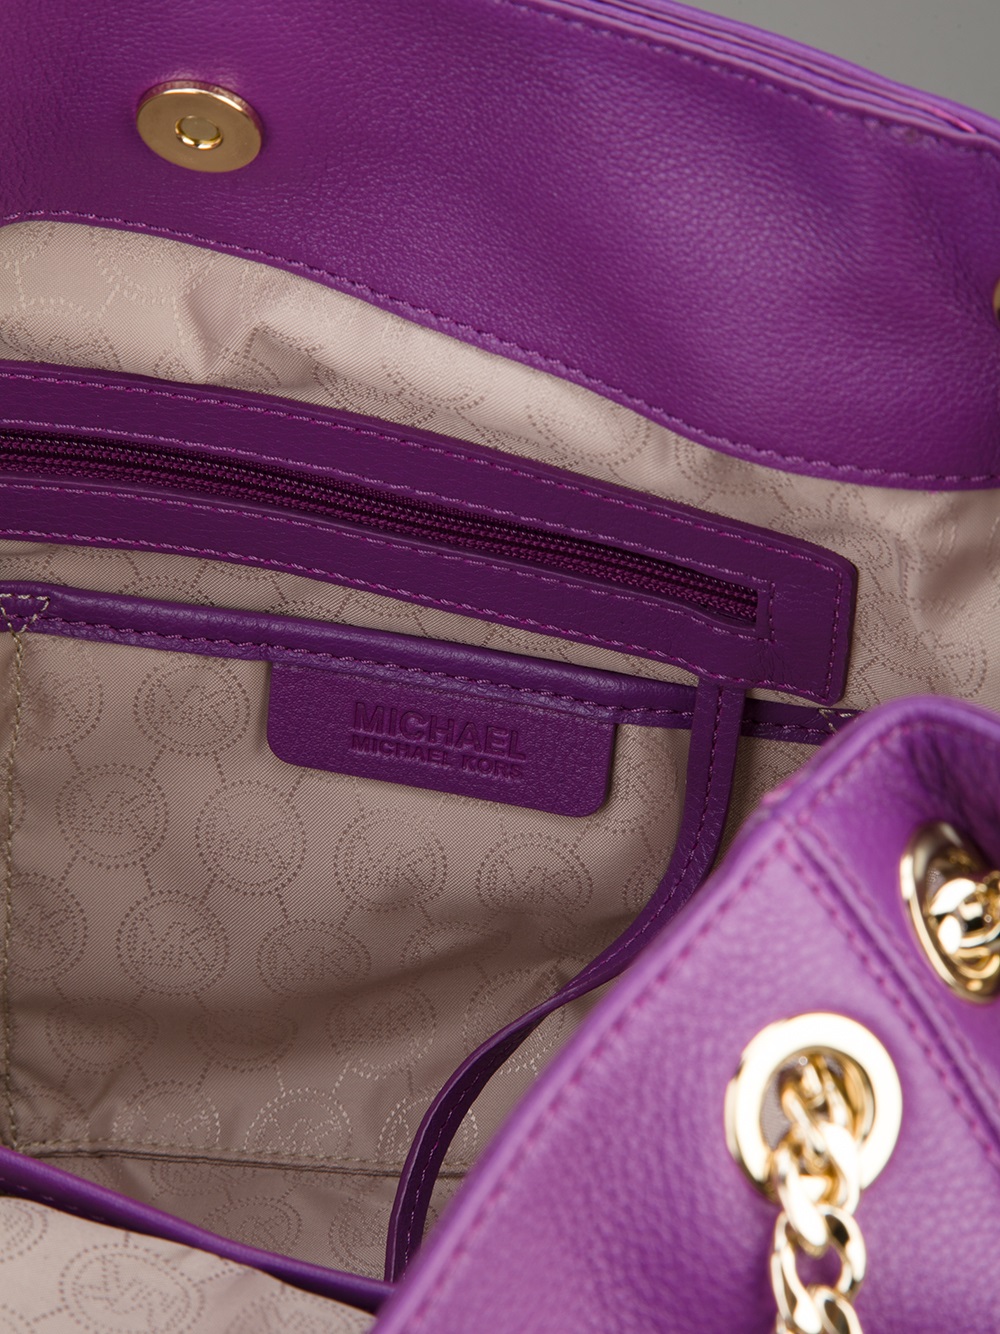 micheal kors purple purse